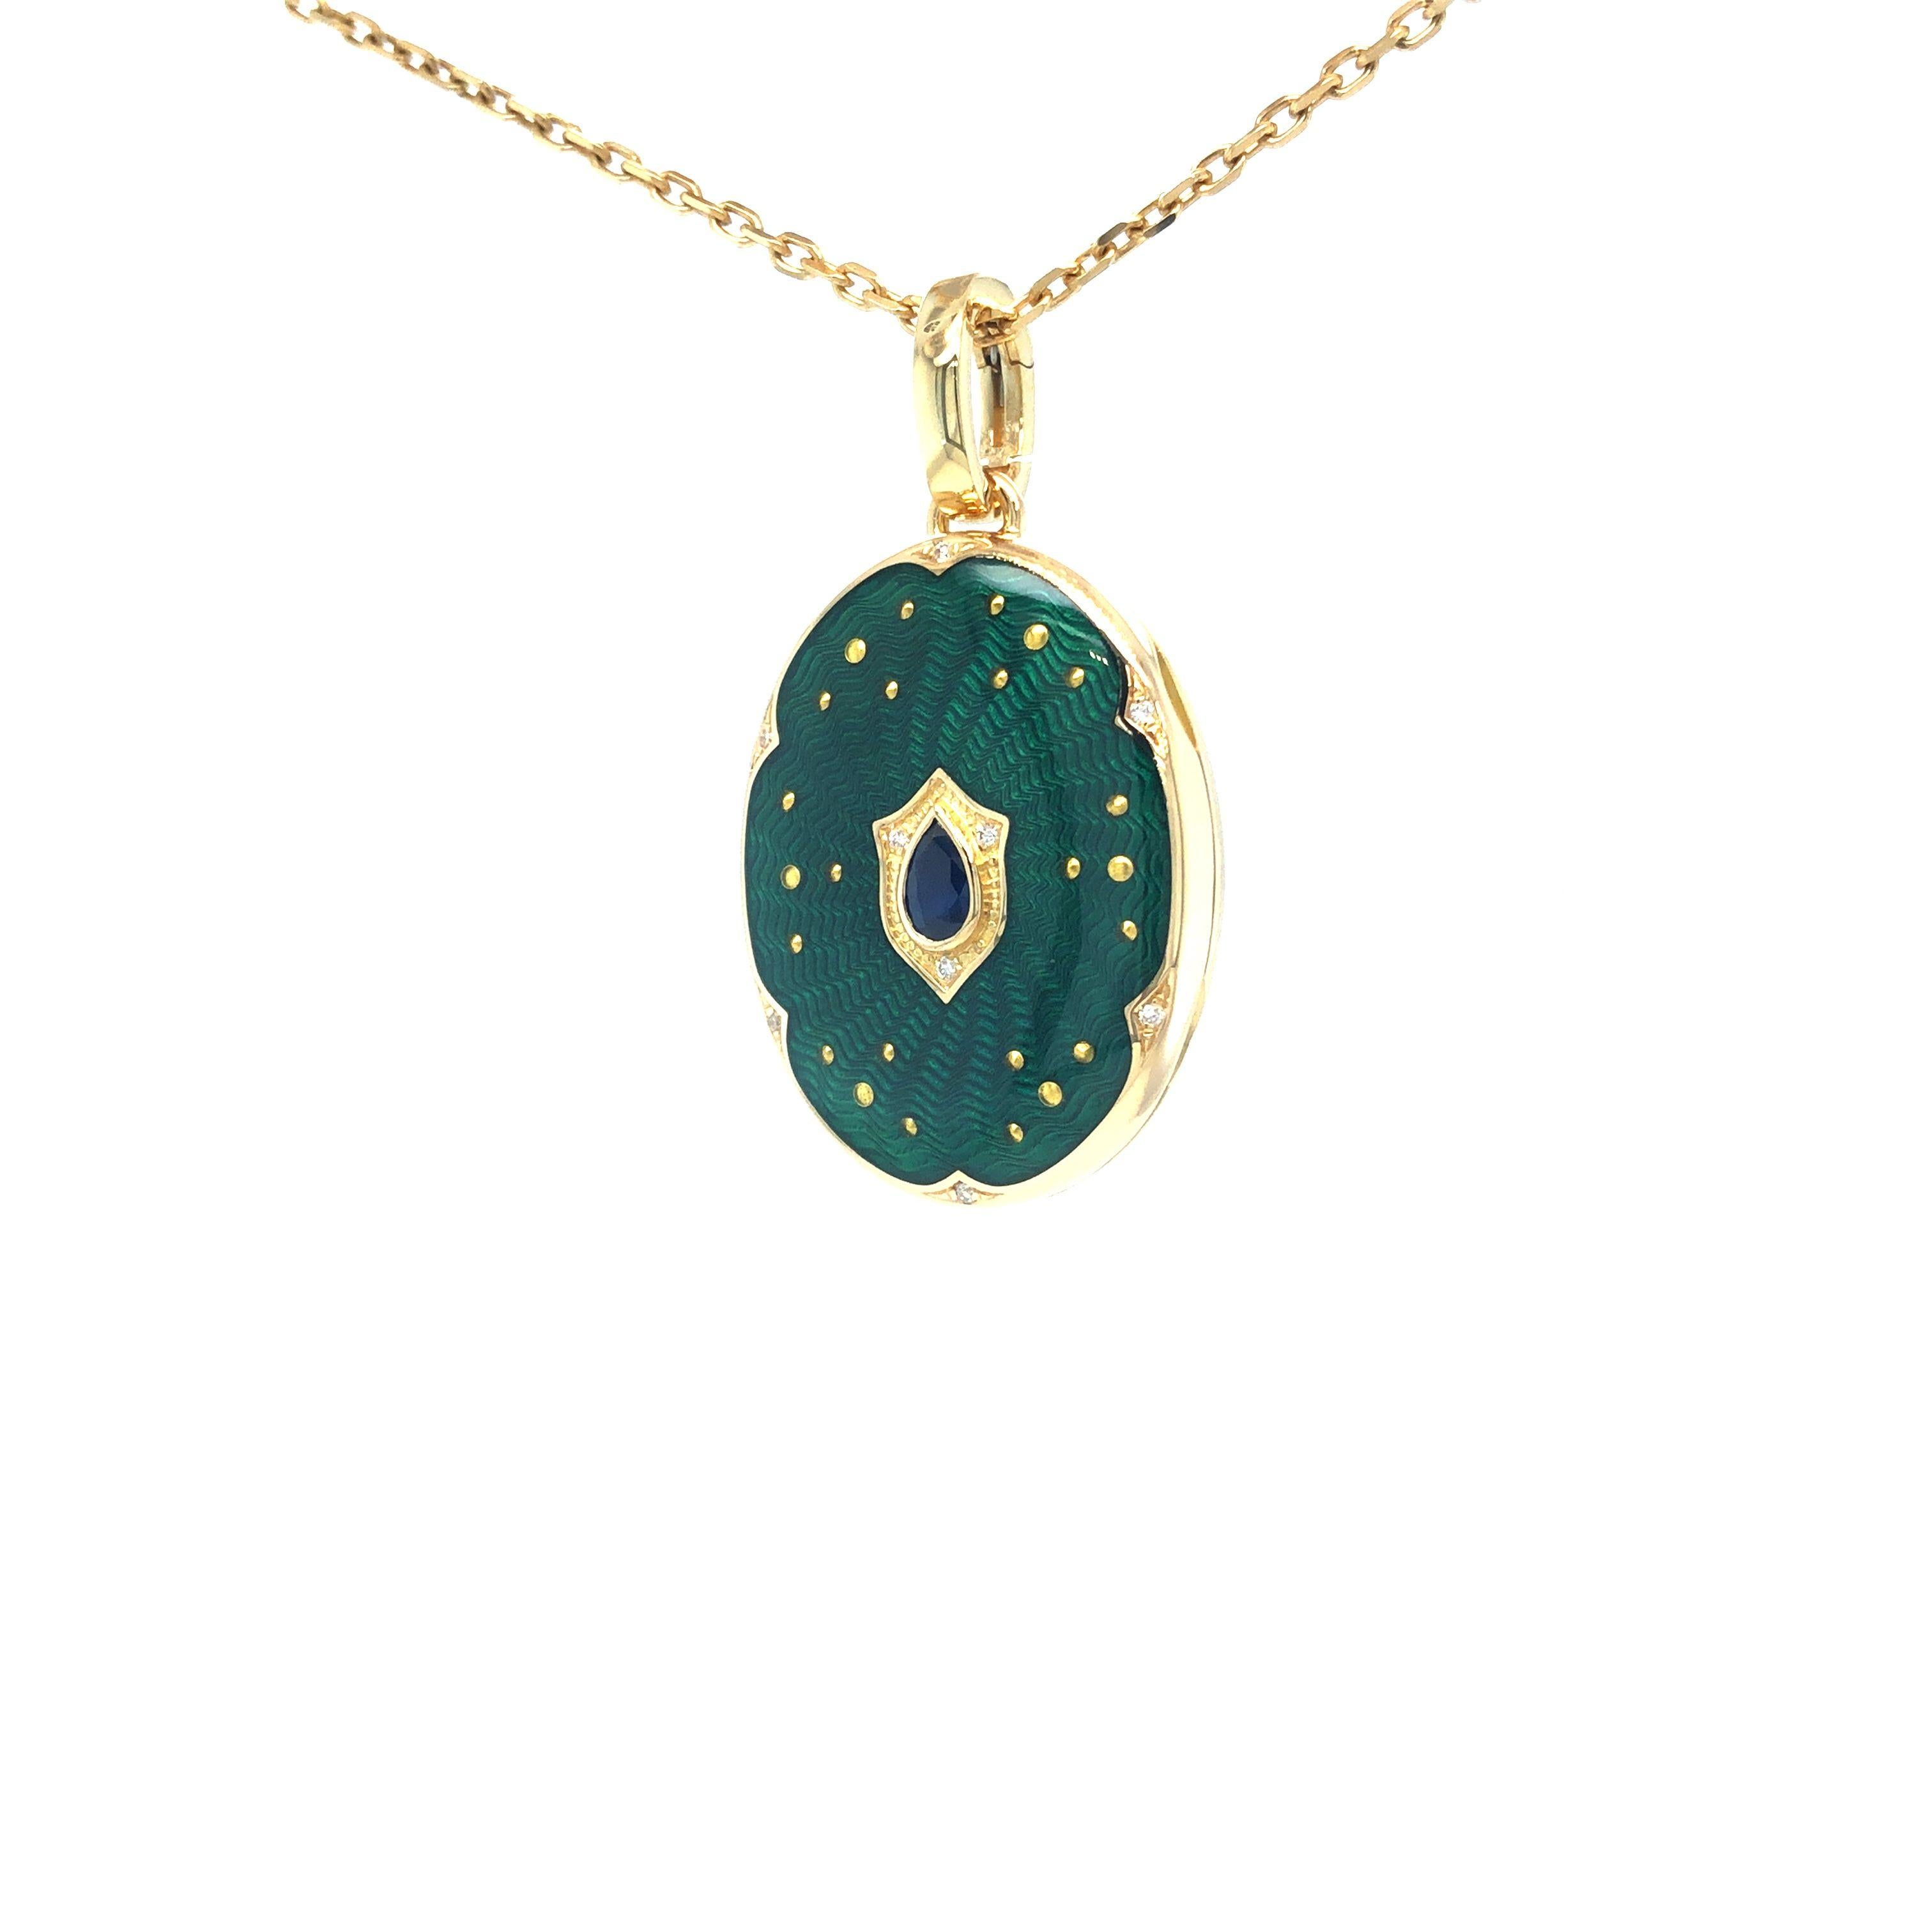 Oval Locket Pendant Necklace 18k YG Green Guilloche Enamel Sapphire 27 x 17 mm For Sale 2